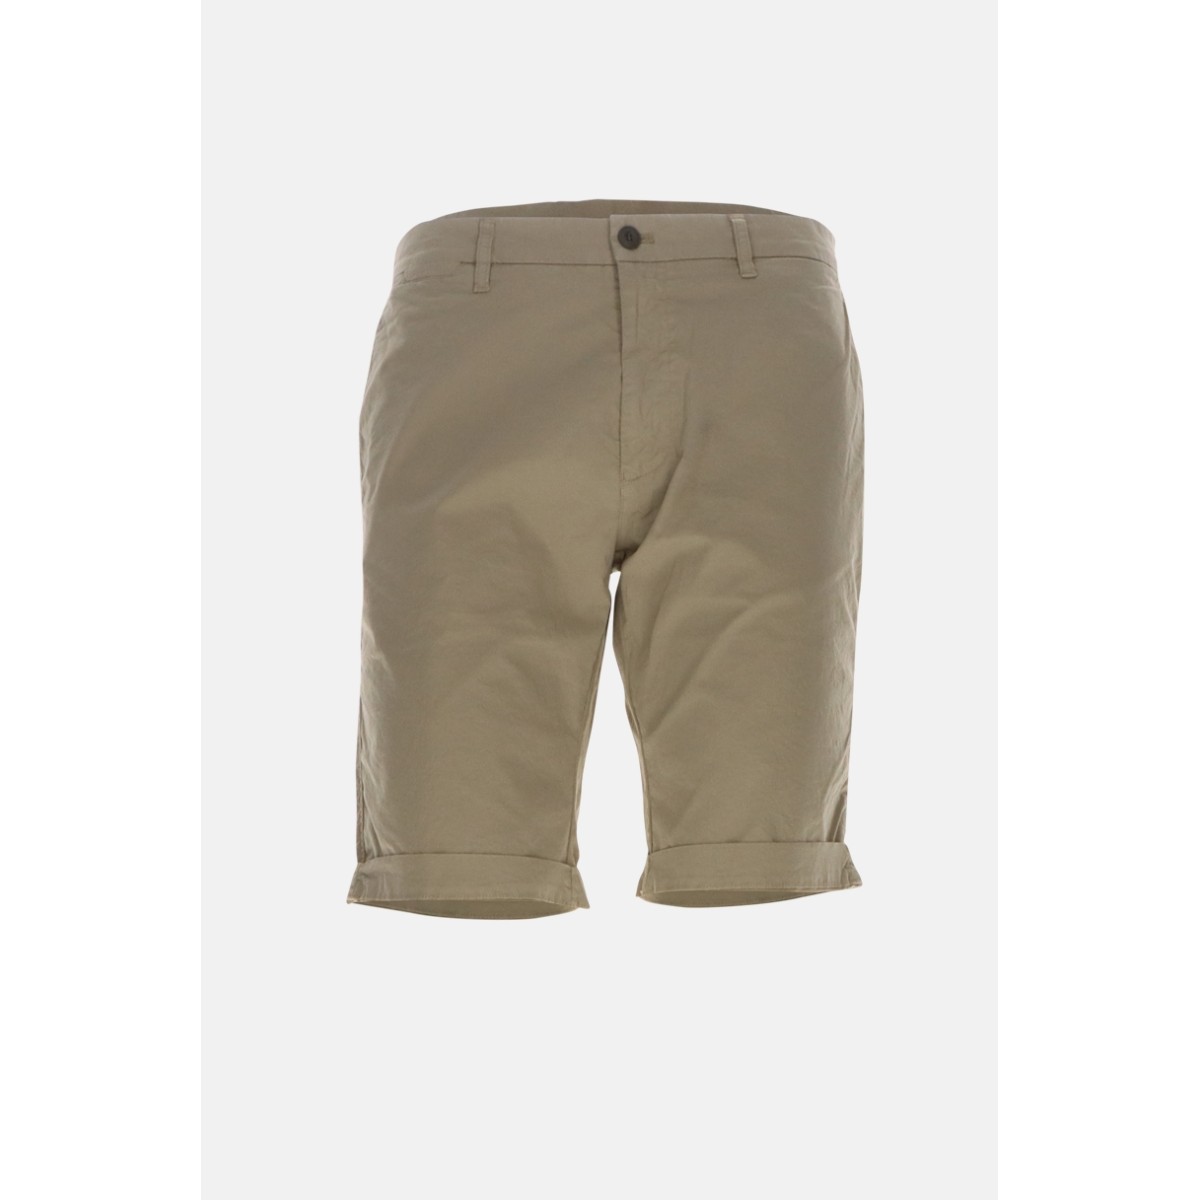 Bermuda shorts Mason's